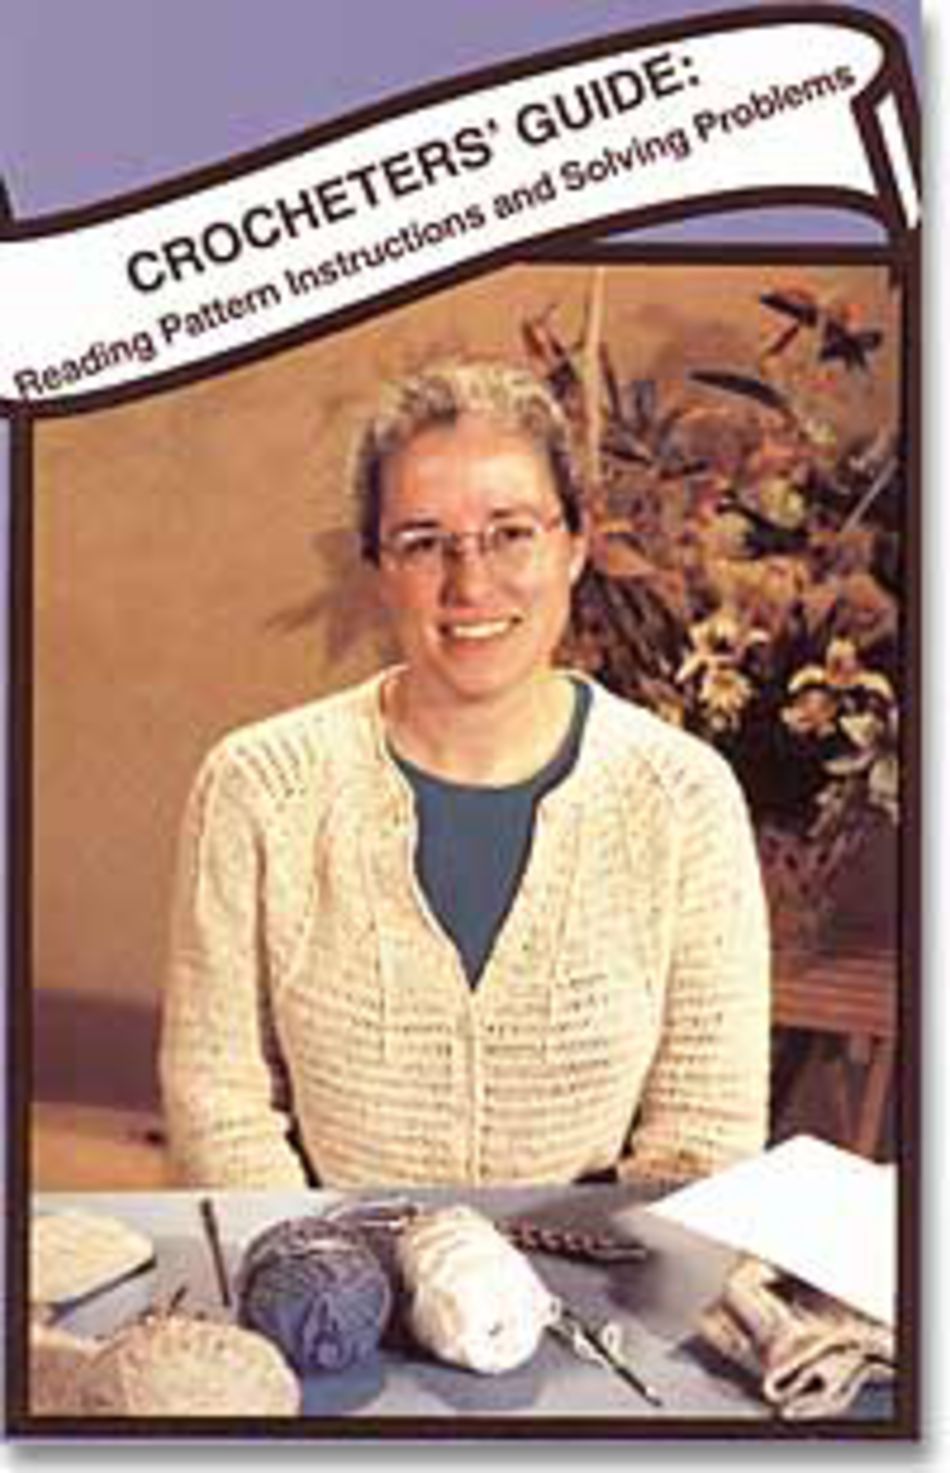 Crochet CDDVD Crocheteraposs Guide  DVD